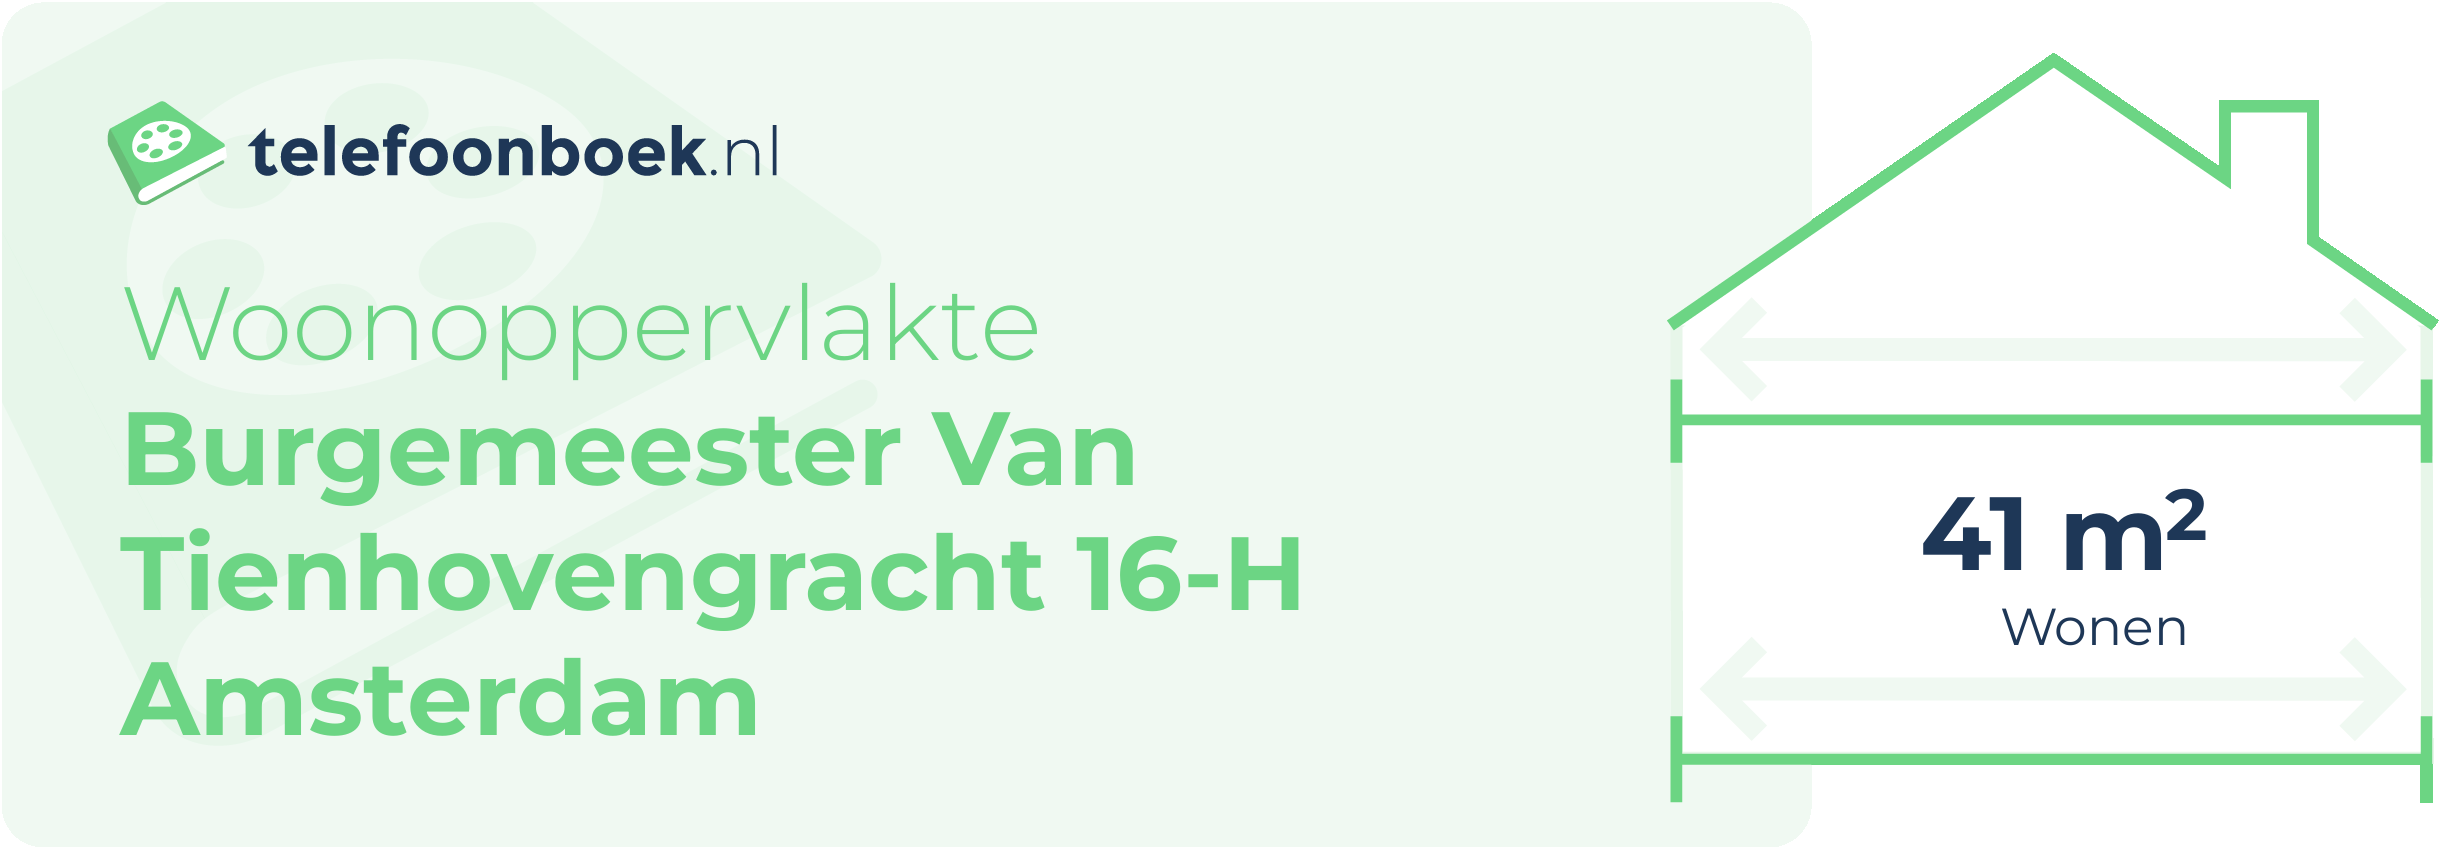 Woonoppervlakte Burgemeester Van Tienhovengracht 16-H Amsterdam